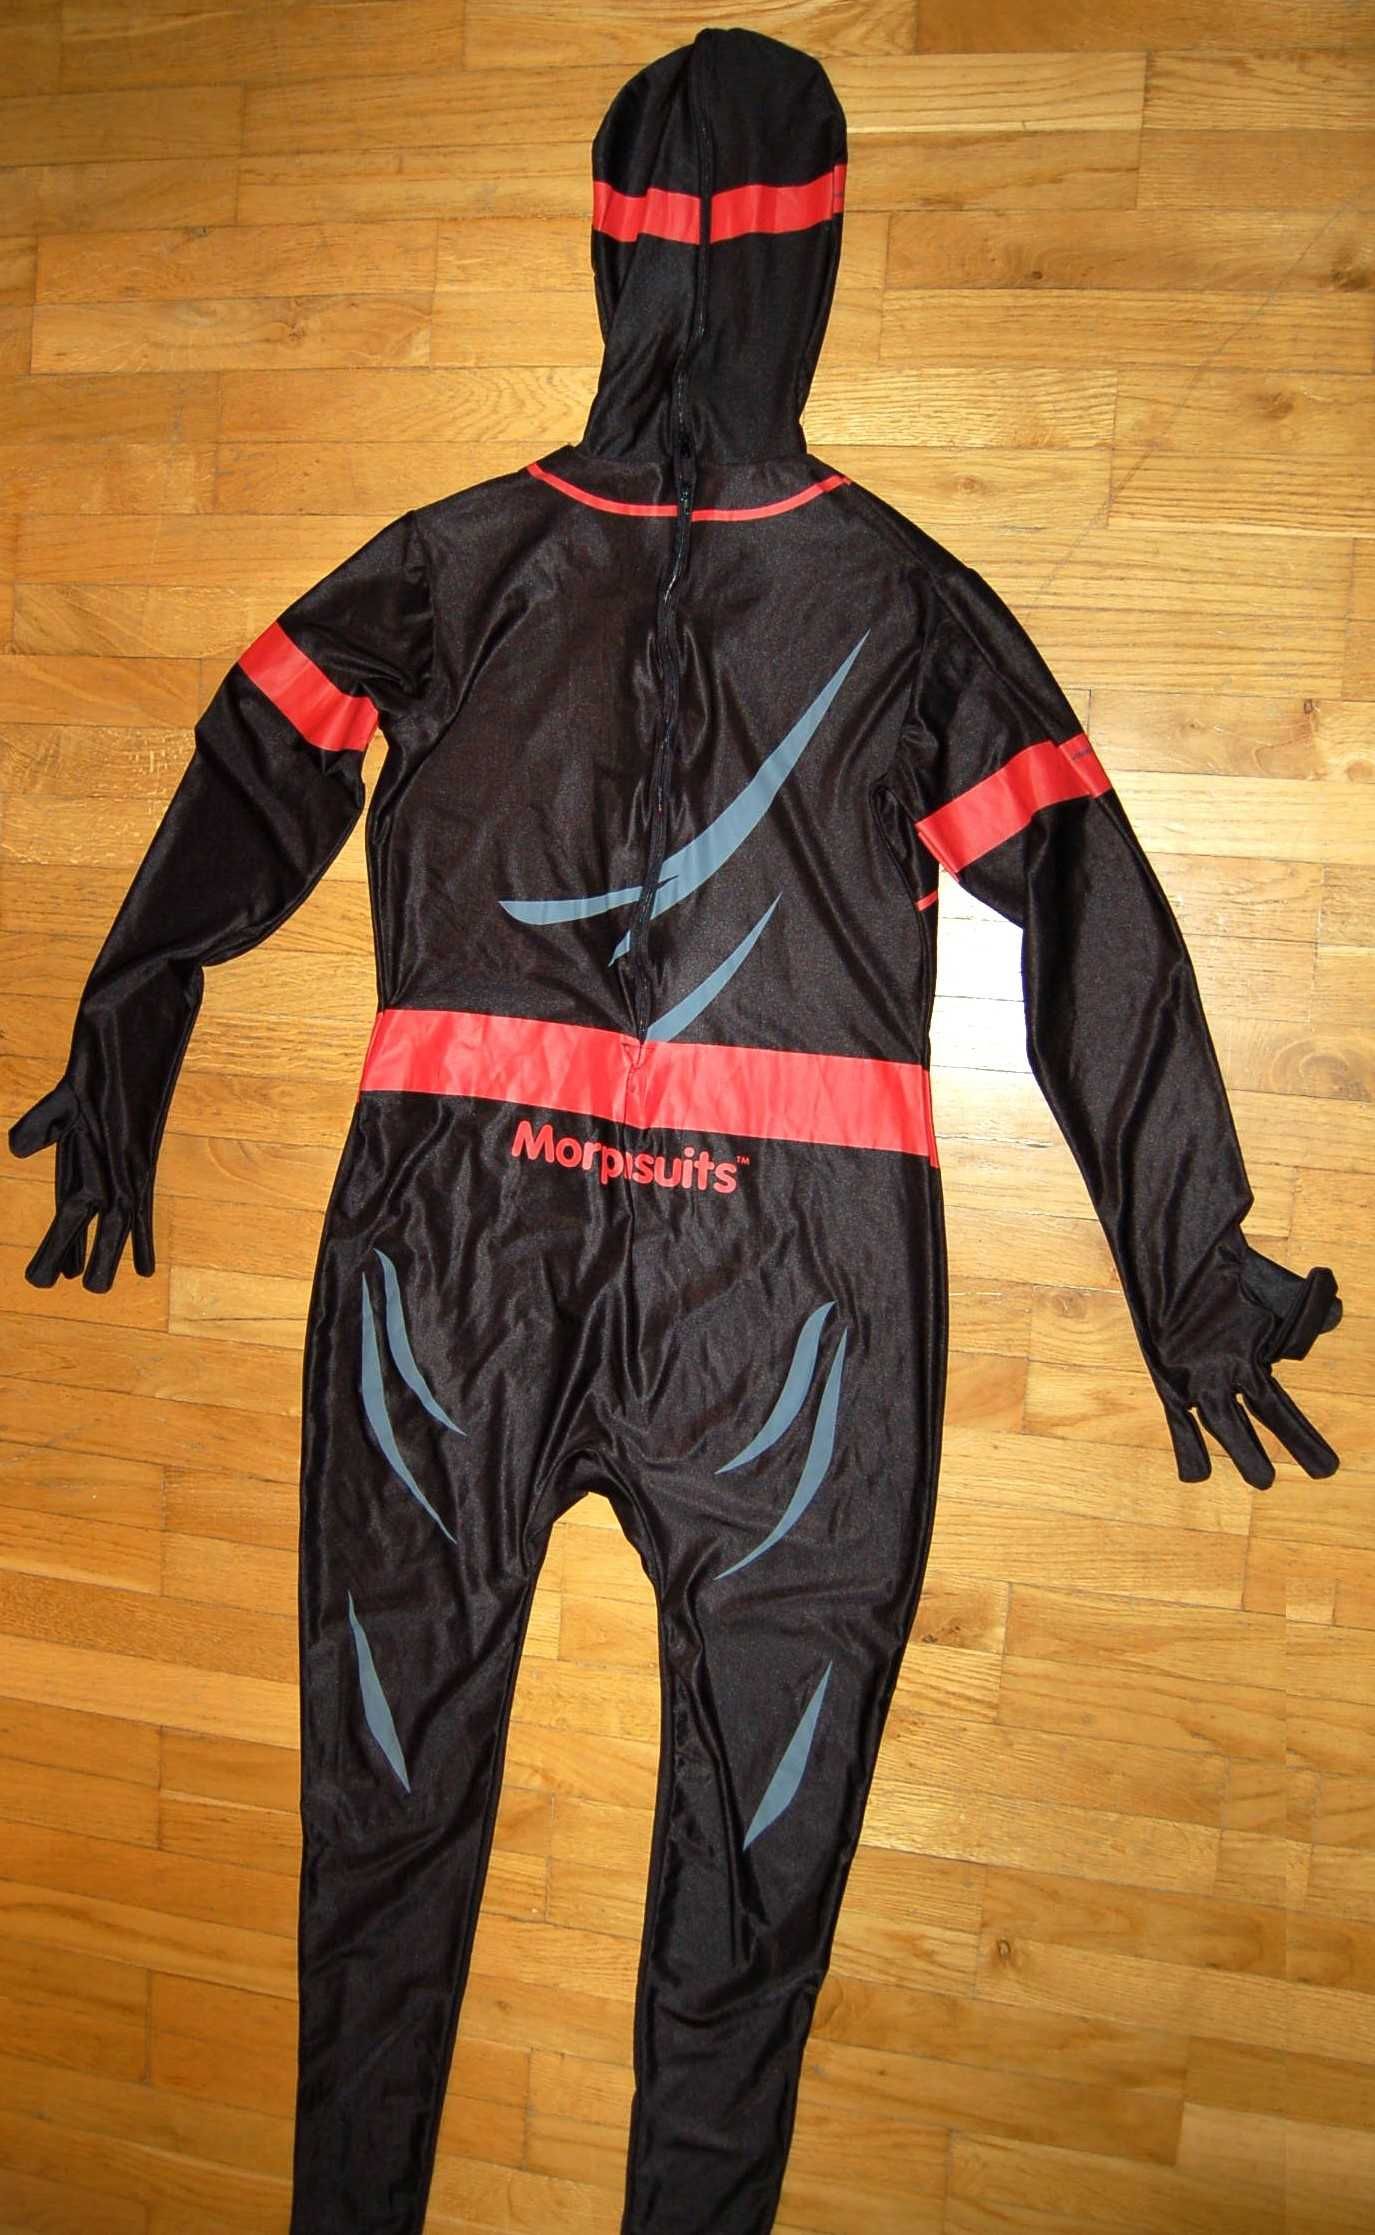 NOWY strój ninja druga skóra rozmiar M/L Morphsuits